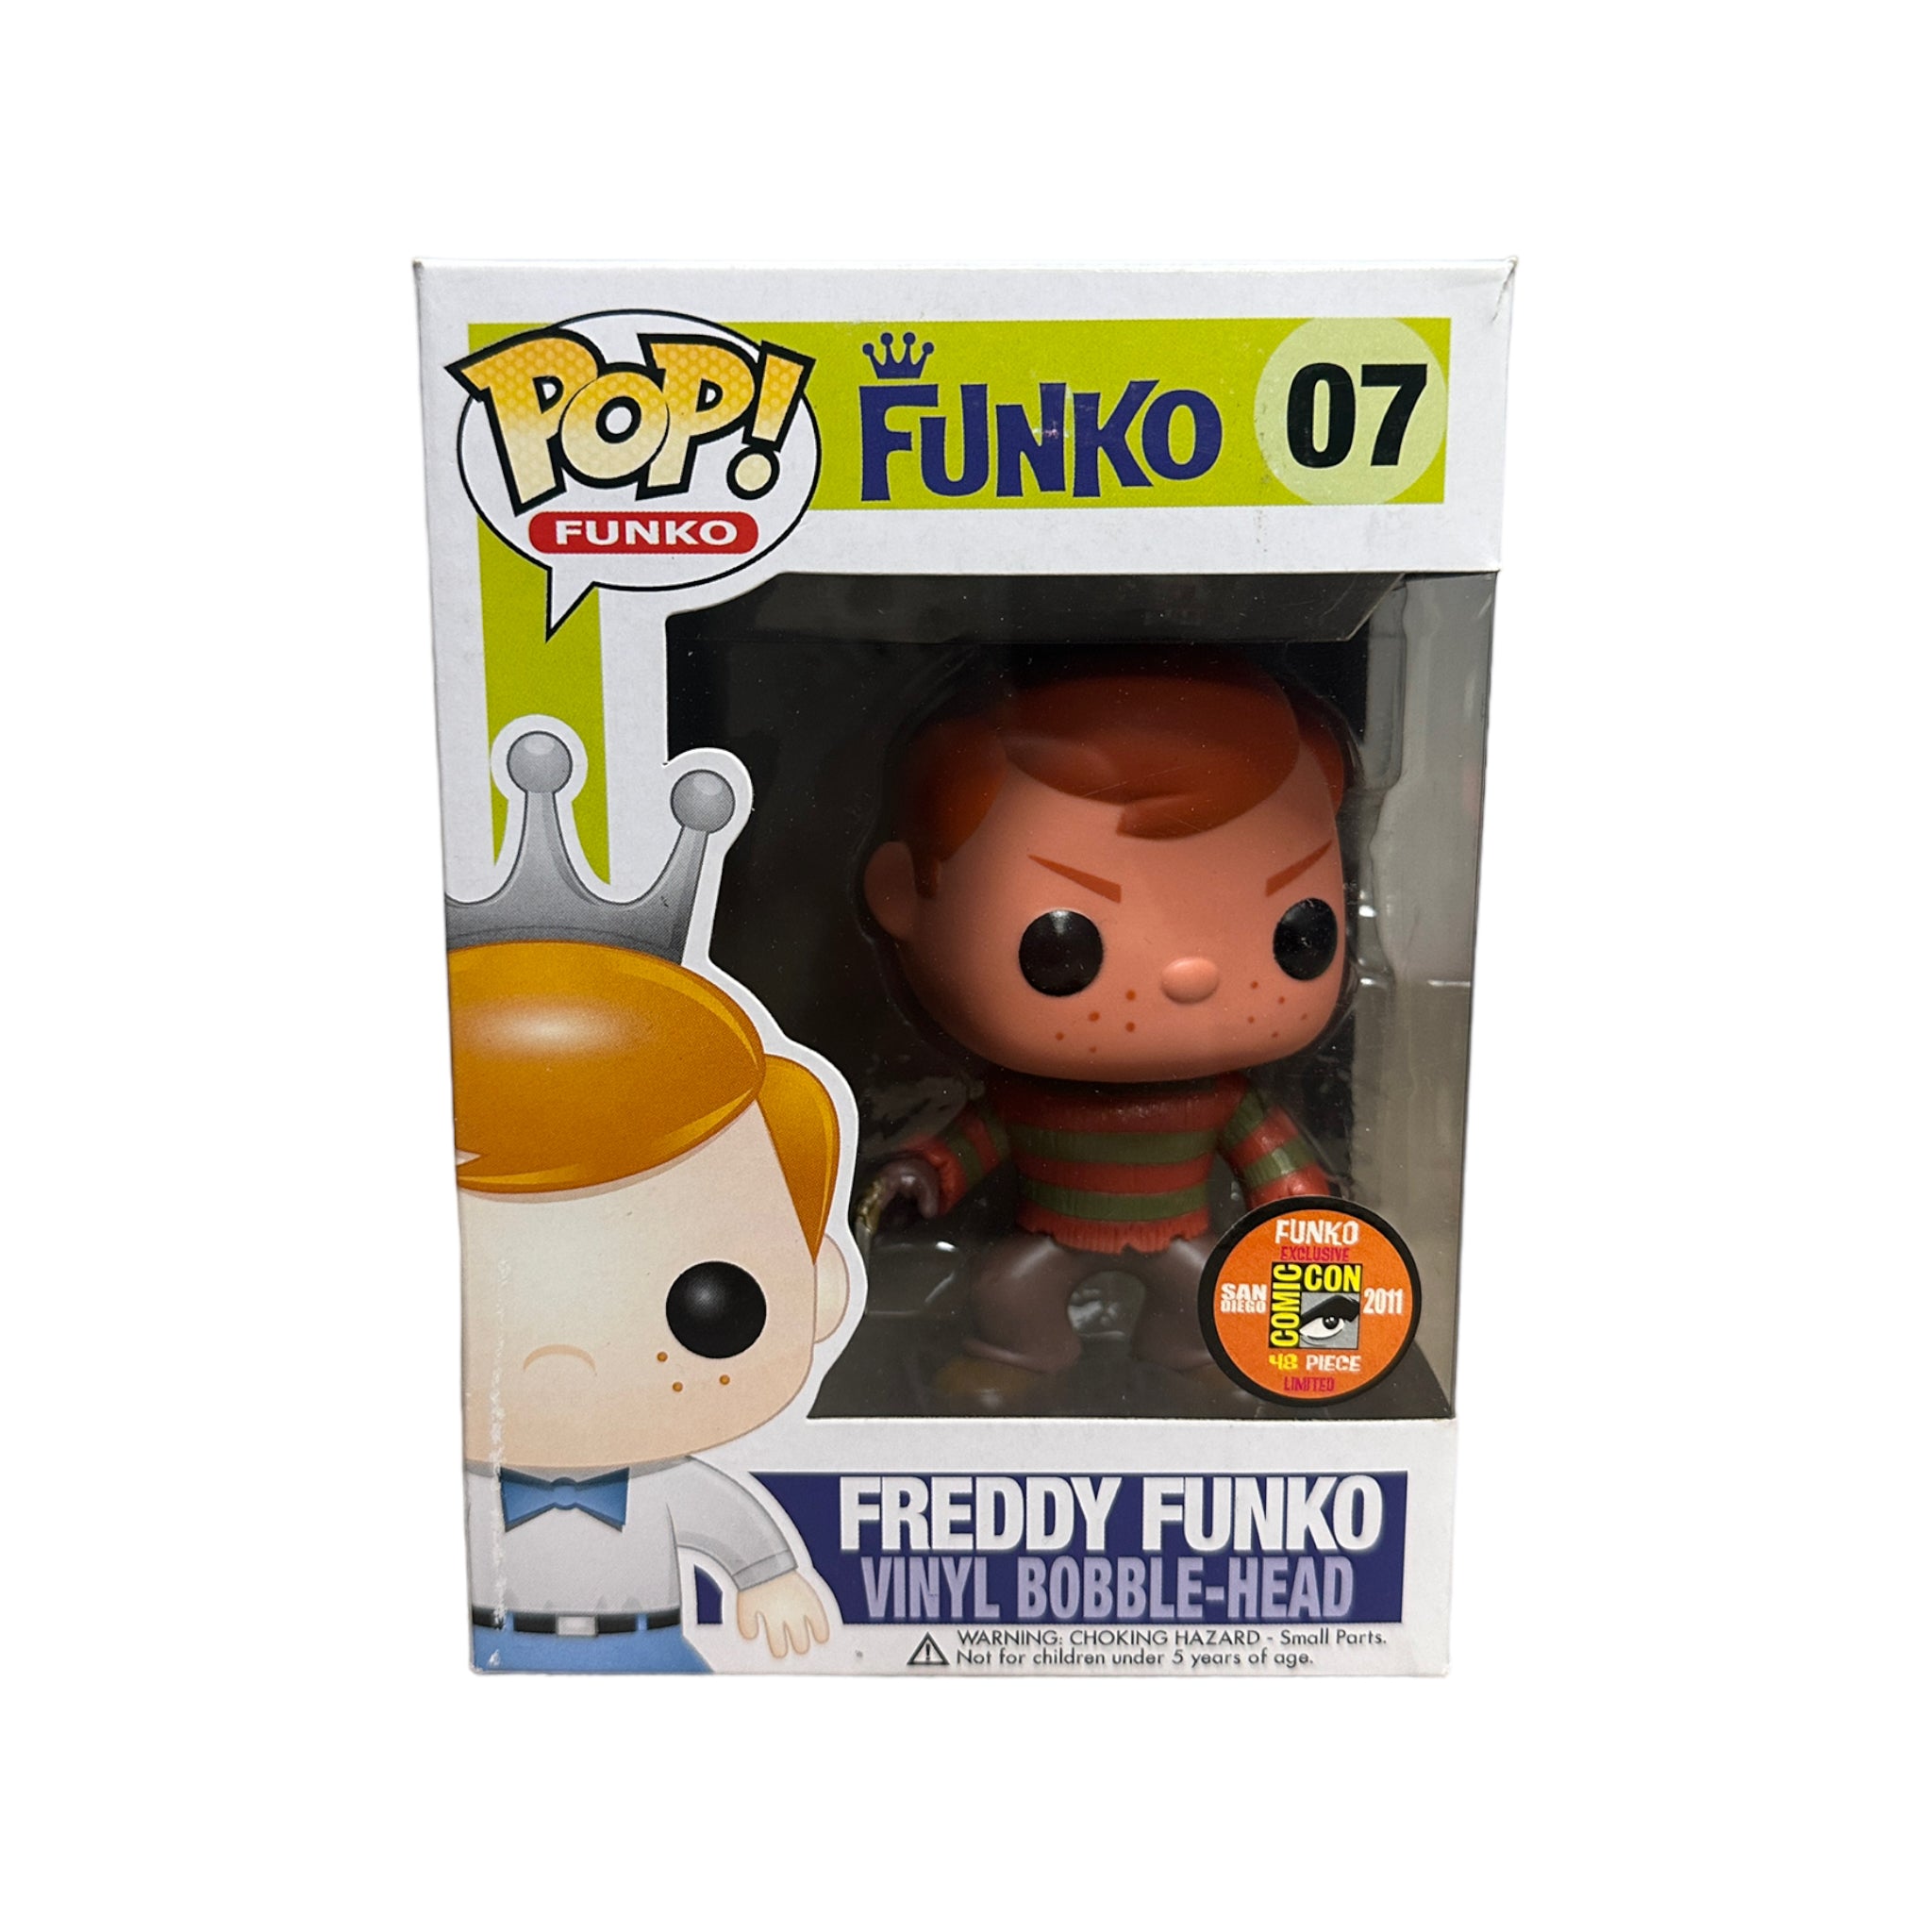 Freddy Funko as Freddy Krueger #07 Funko Pop! - SDCC 2011 Exclusive LE48 Pcs - Condition 7/10